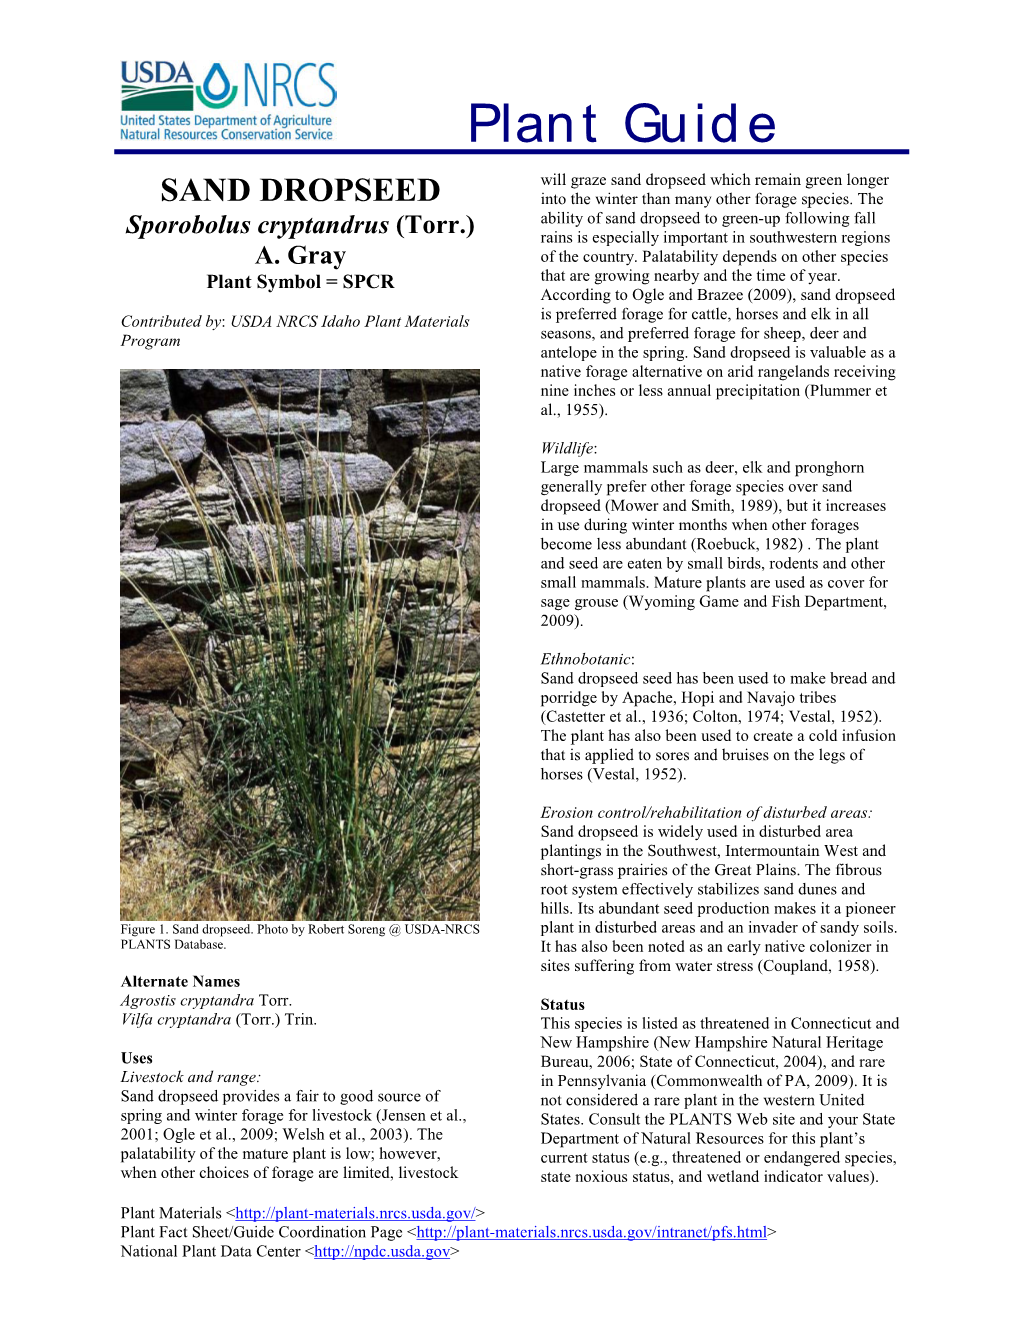 Sand Dropseed (Sporobolus Cryptandrus) Plant Guide